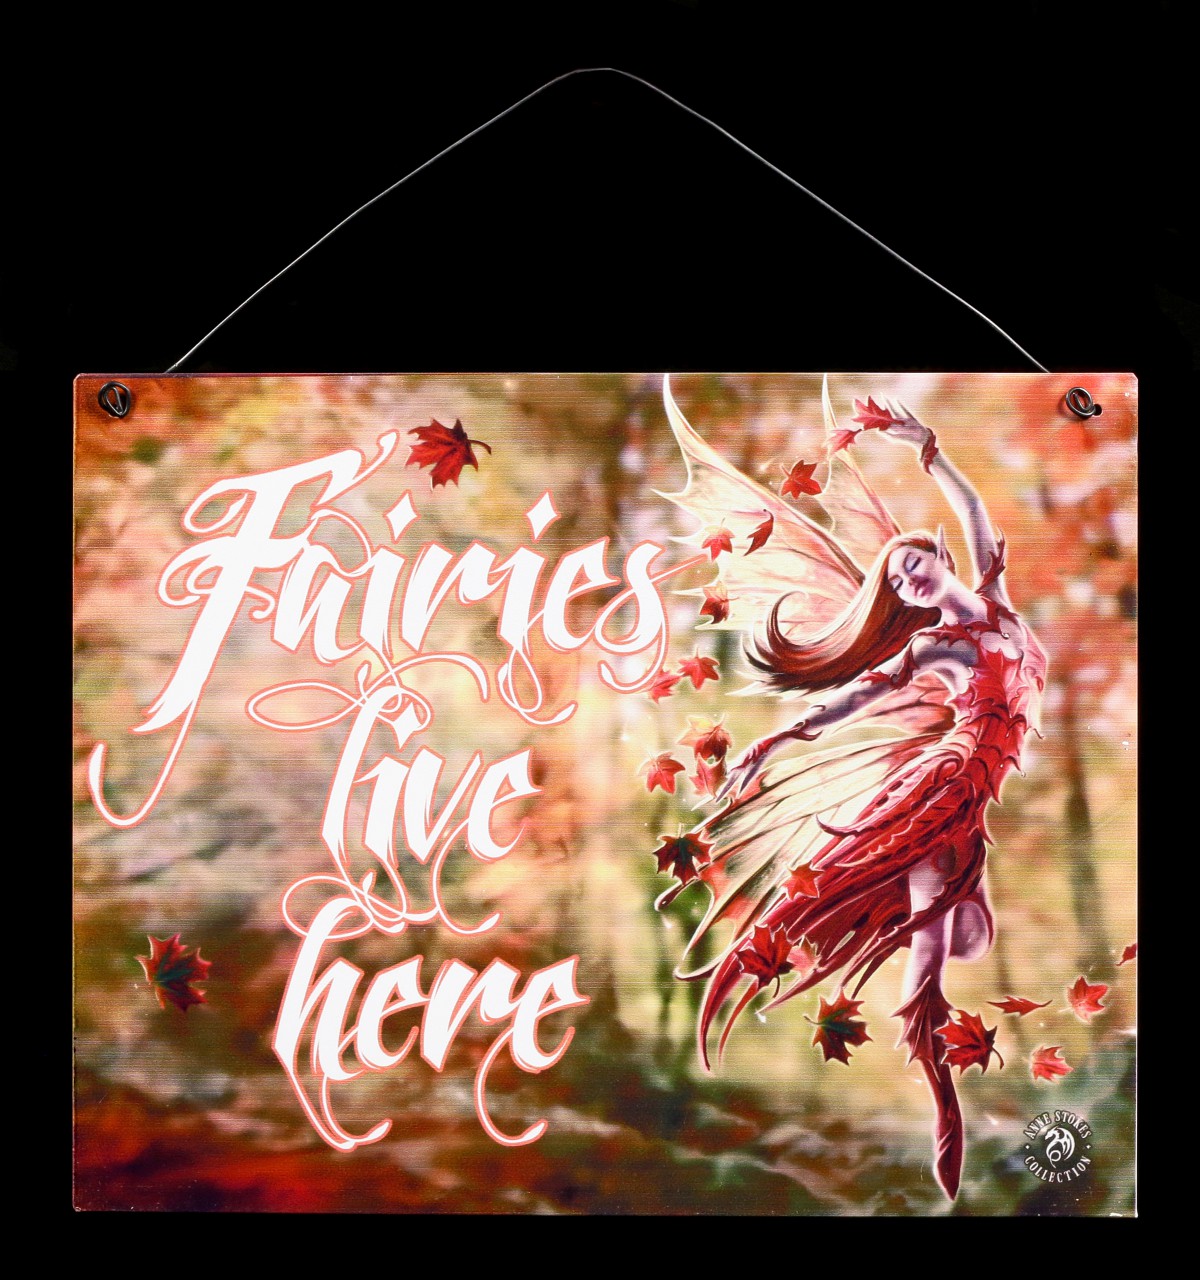 Autumn Fairy Metal Sign - Fairies live here